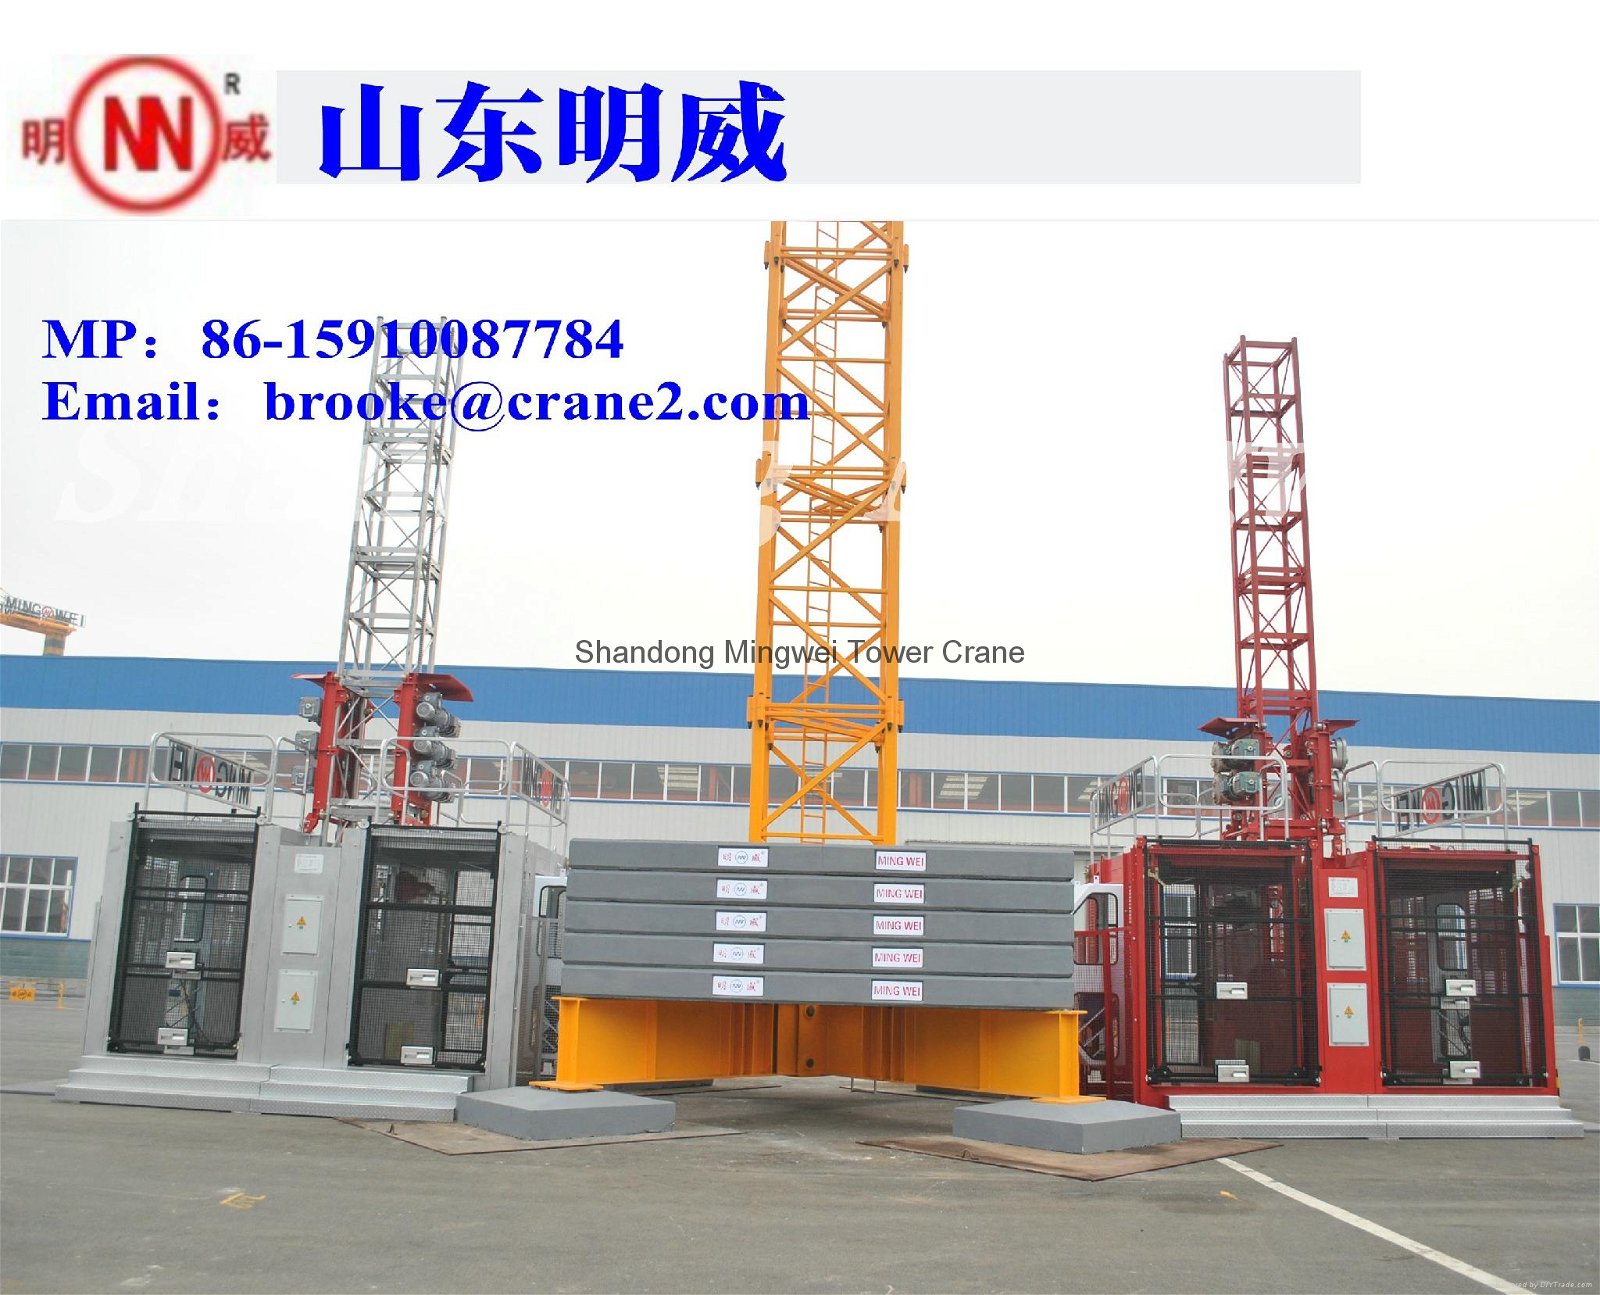 Shandong Mingwei Tower crane manufacture QTZ100(6010)-8T 4